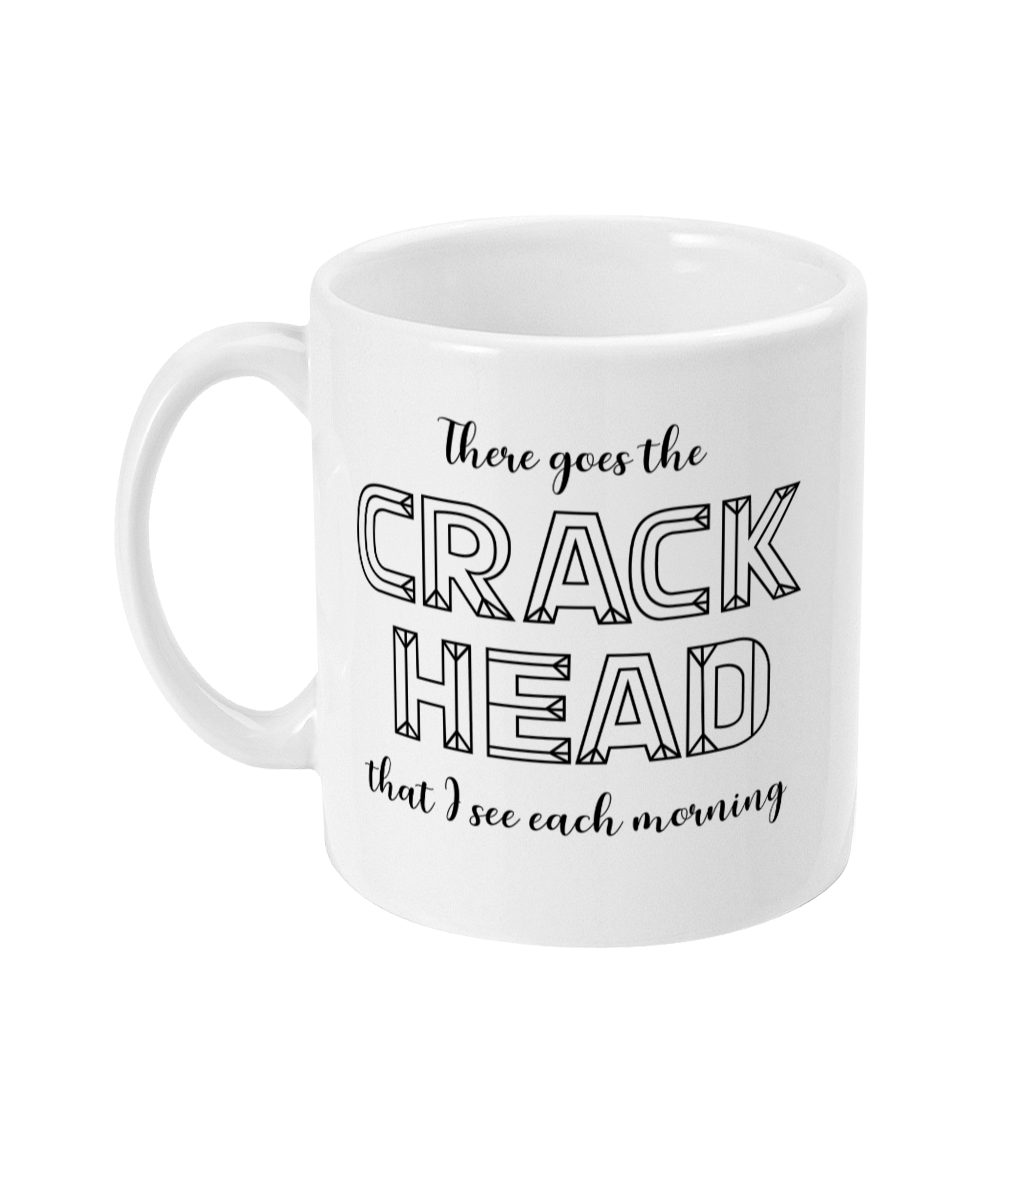 Crack Head mug